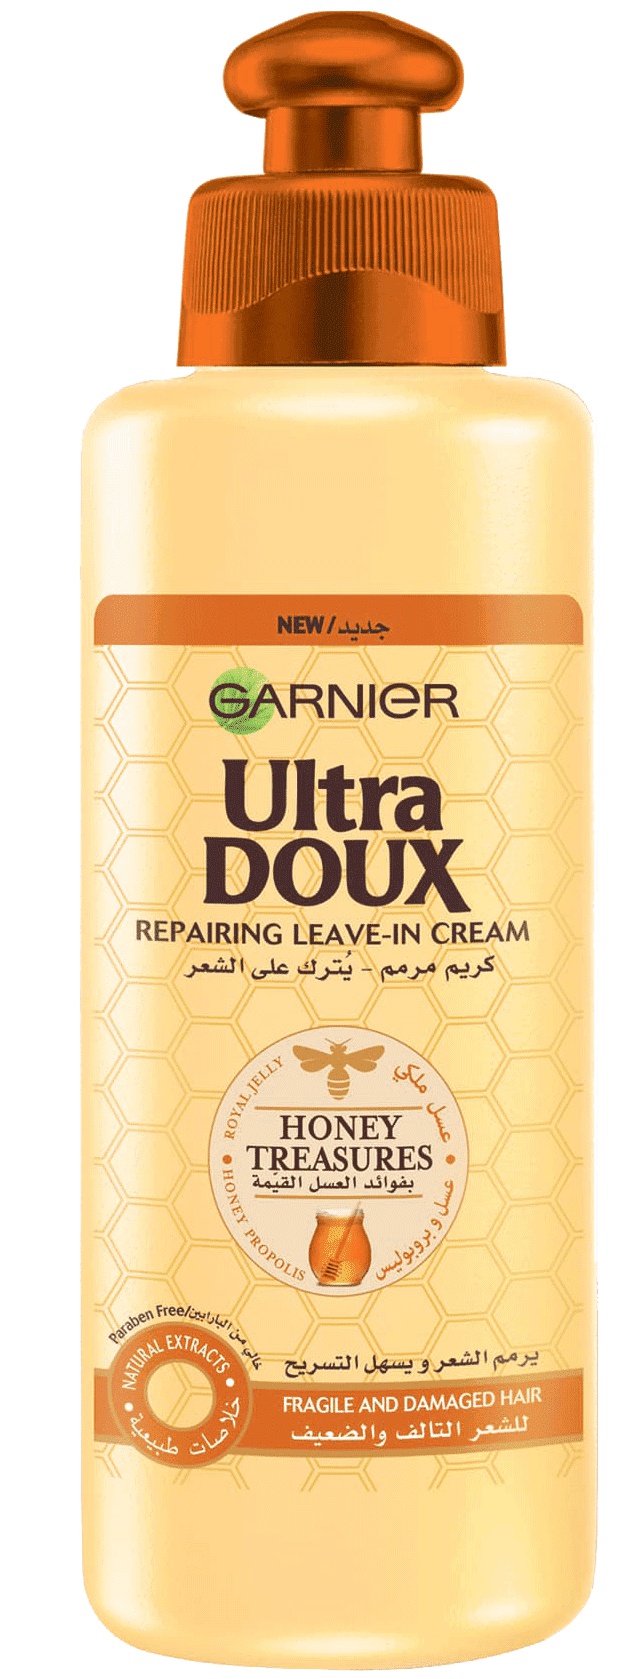 Garnier Ultra Doux Honey Treasures Leave-in Cream